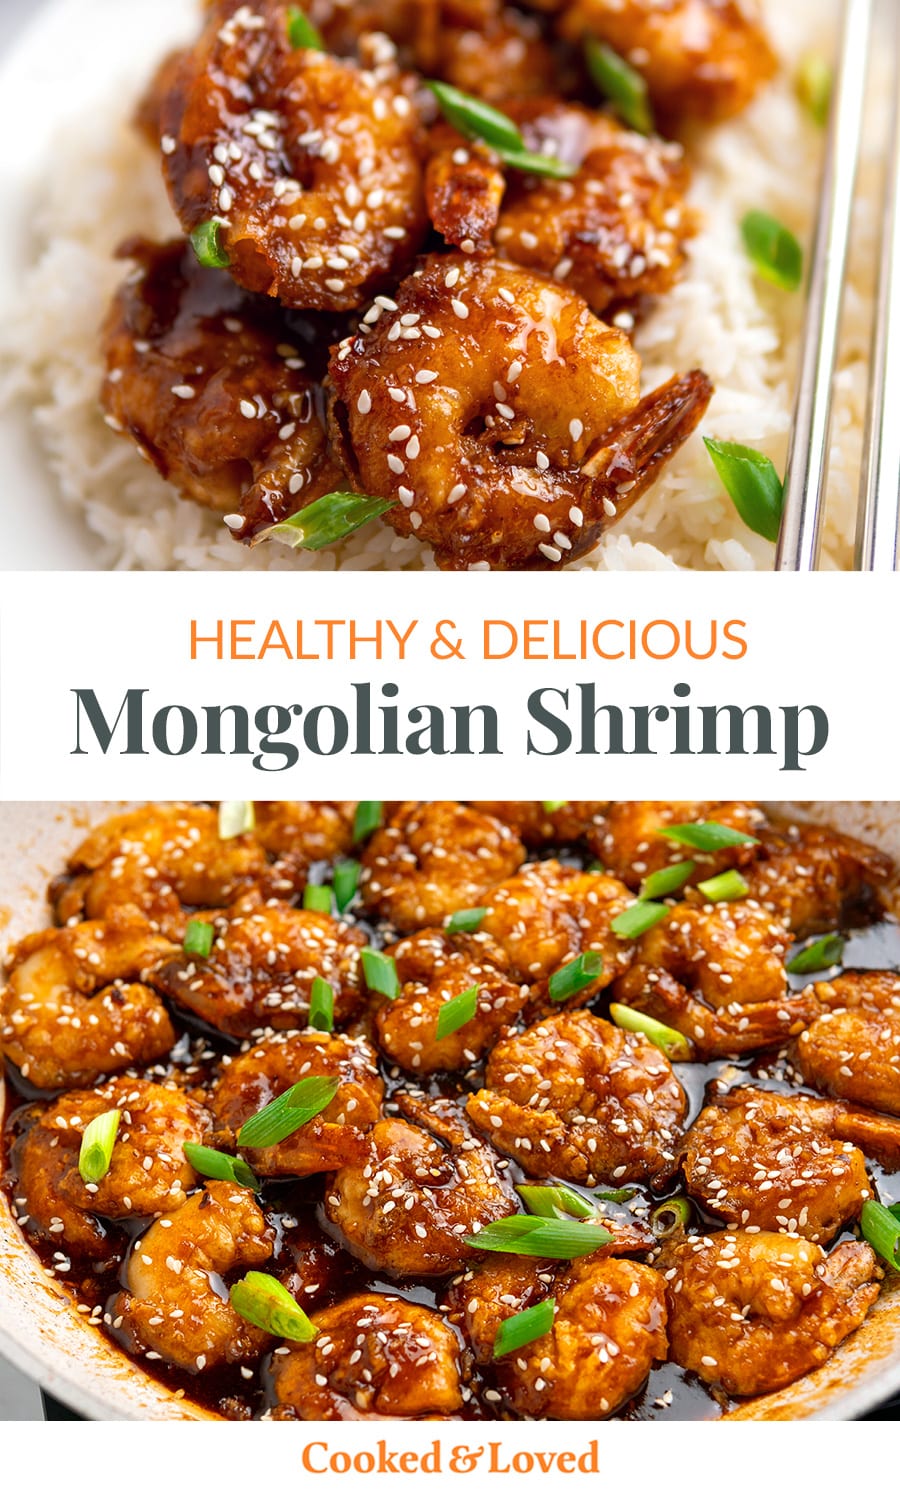 Mongolian Shrimp - MindtoHealth